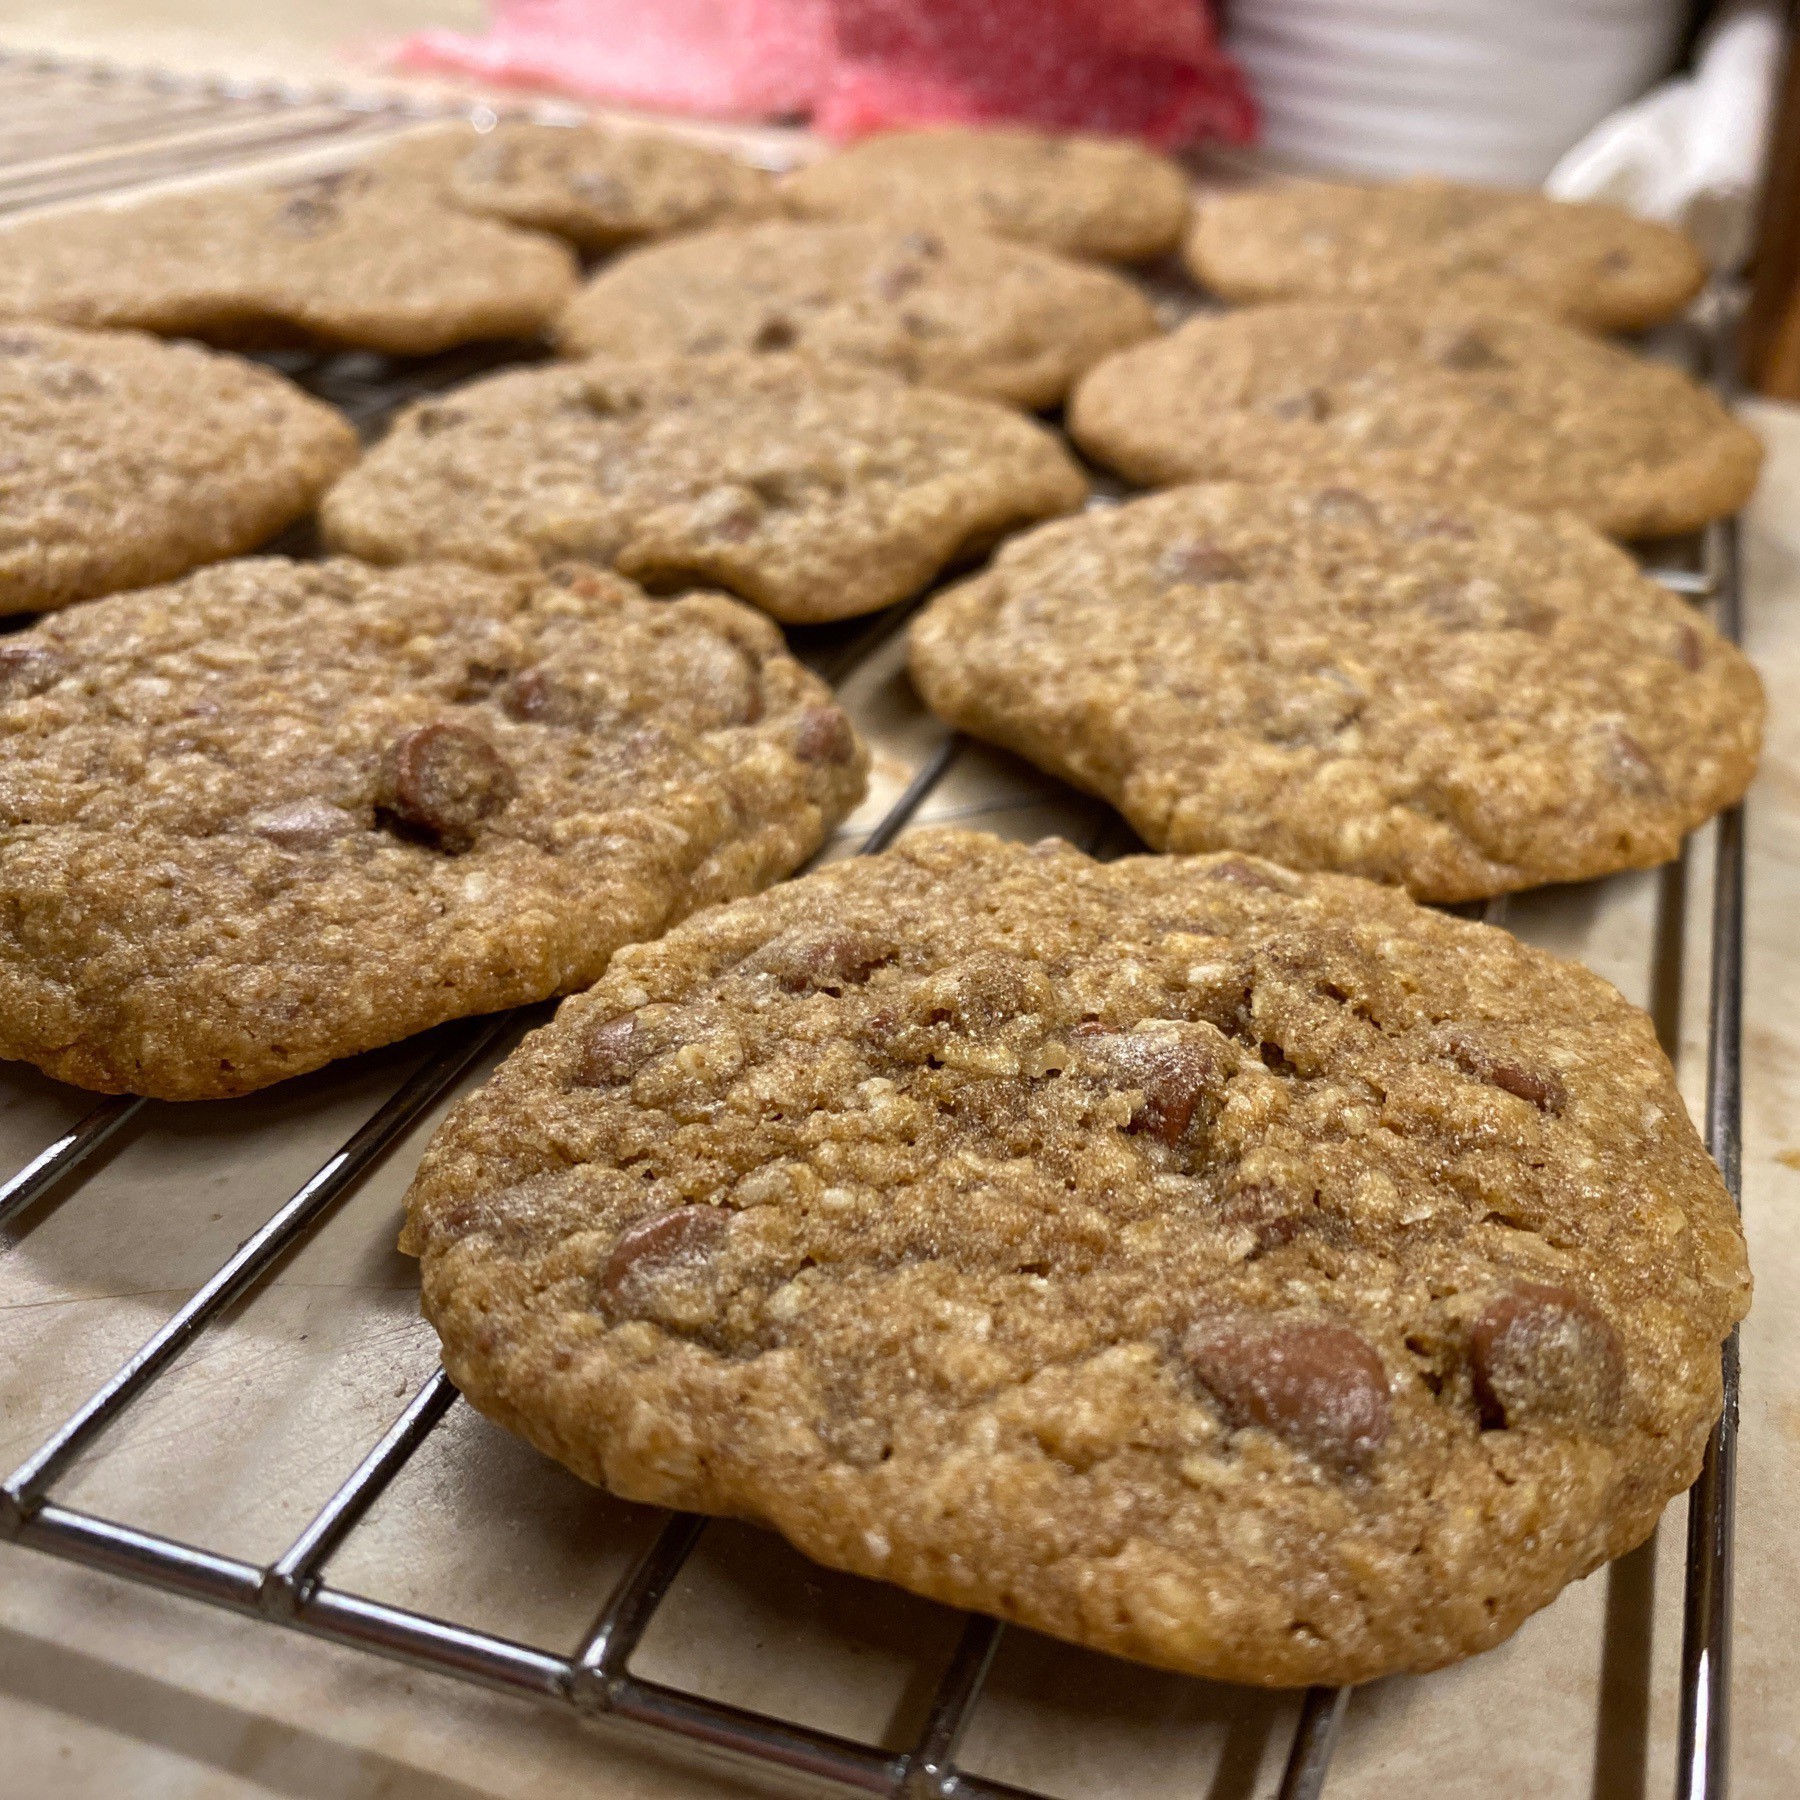 Chocolate chip cookies on rack.